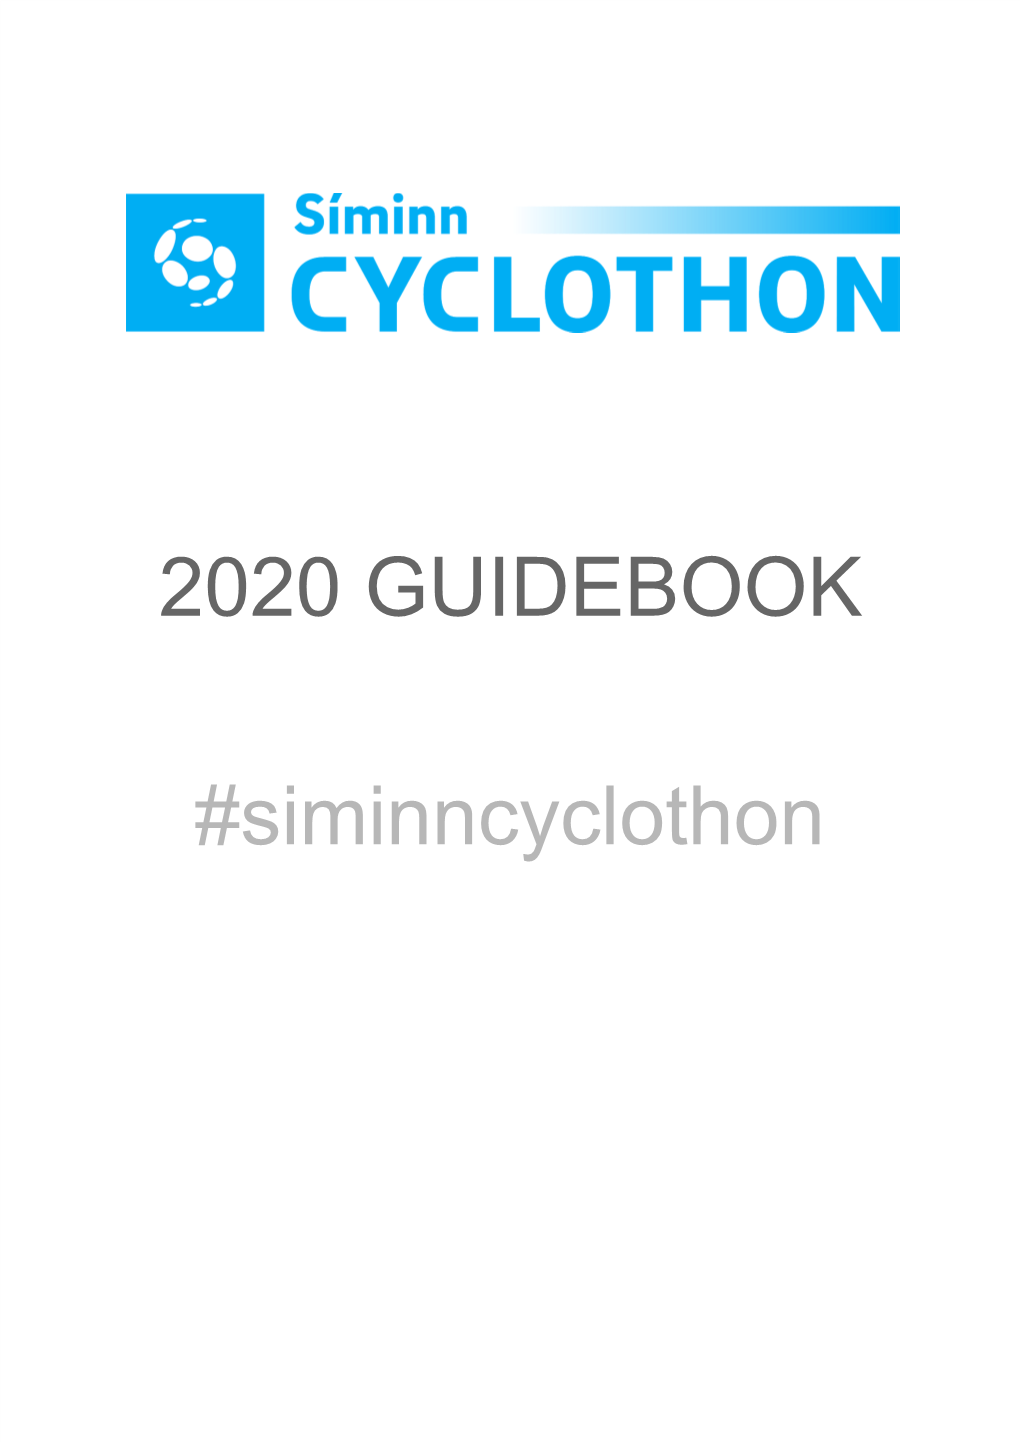 2020 GUIDEBOOK #Siminncyclothon